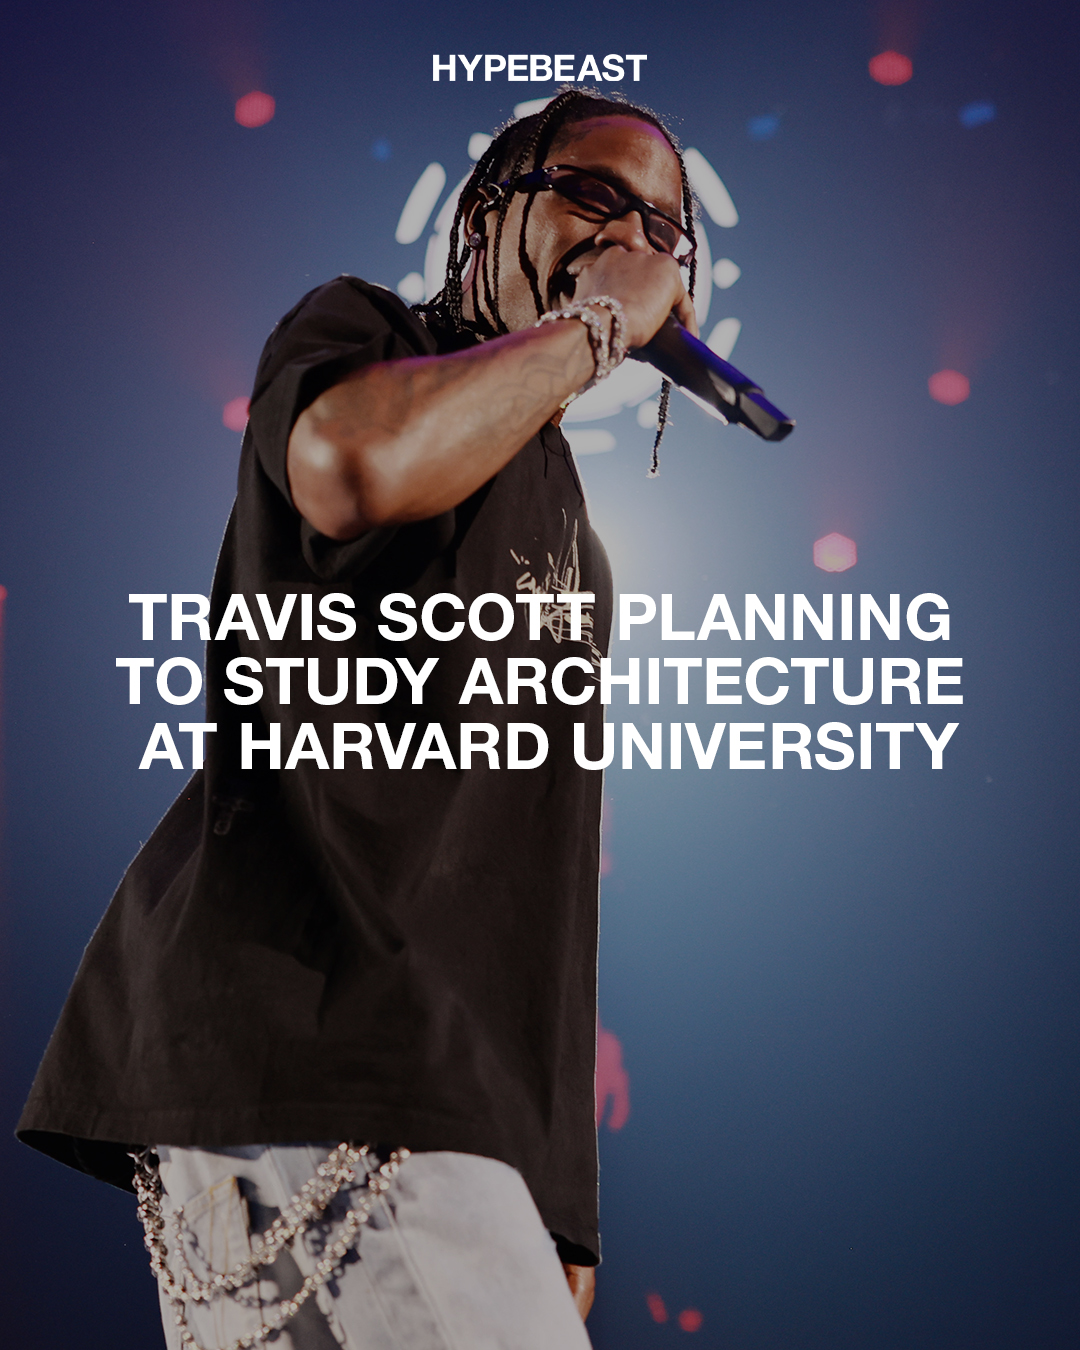 Travis Scott wants to study architecture at Harvard - HIGHXTAR.